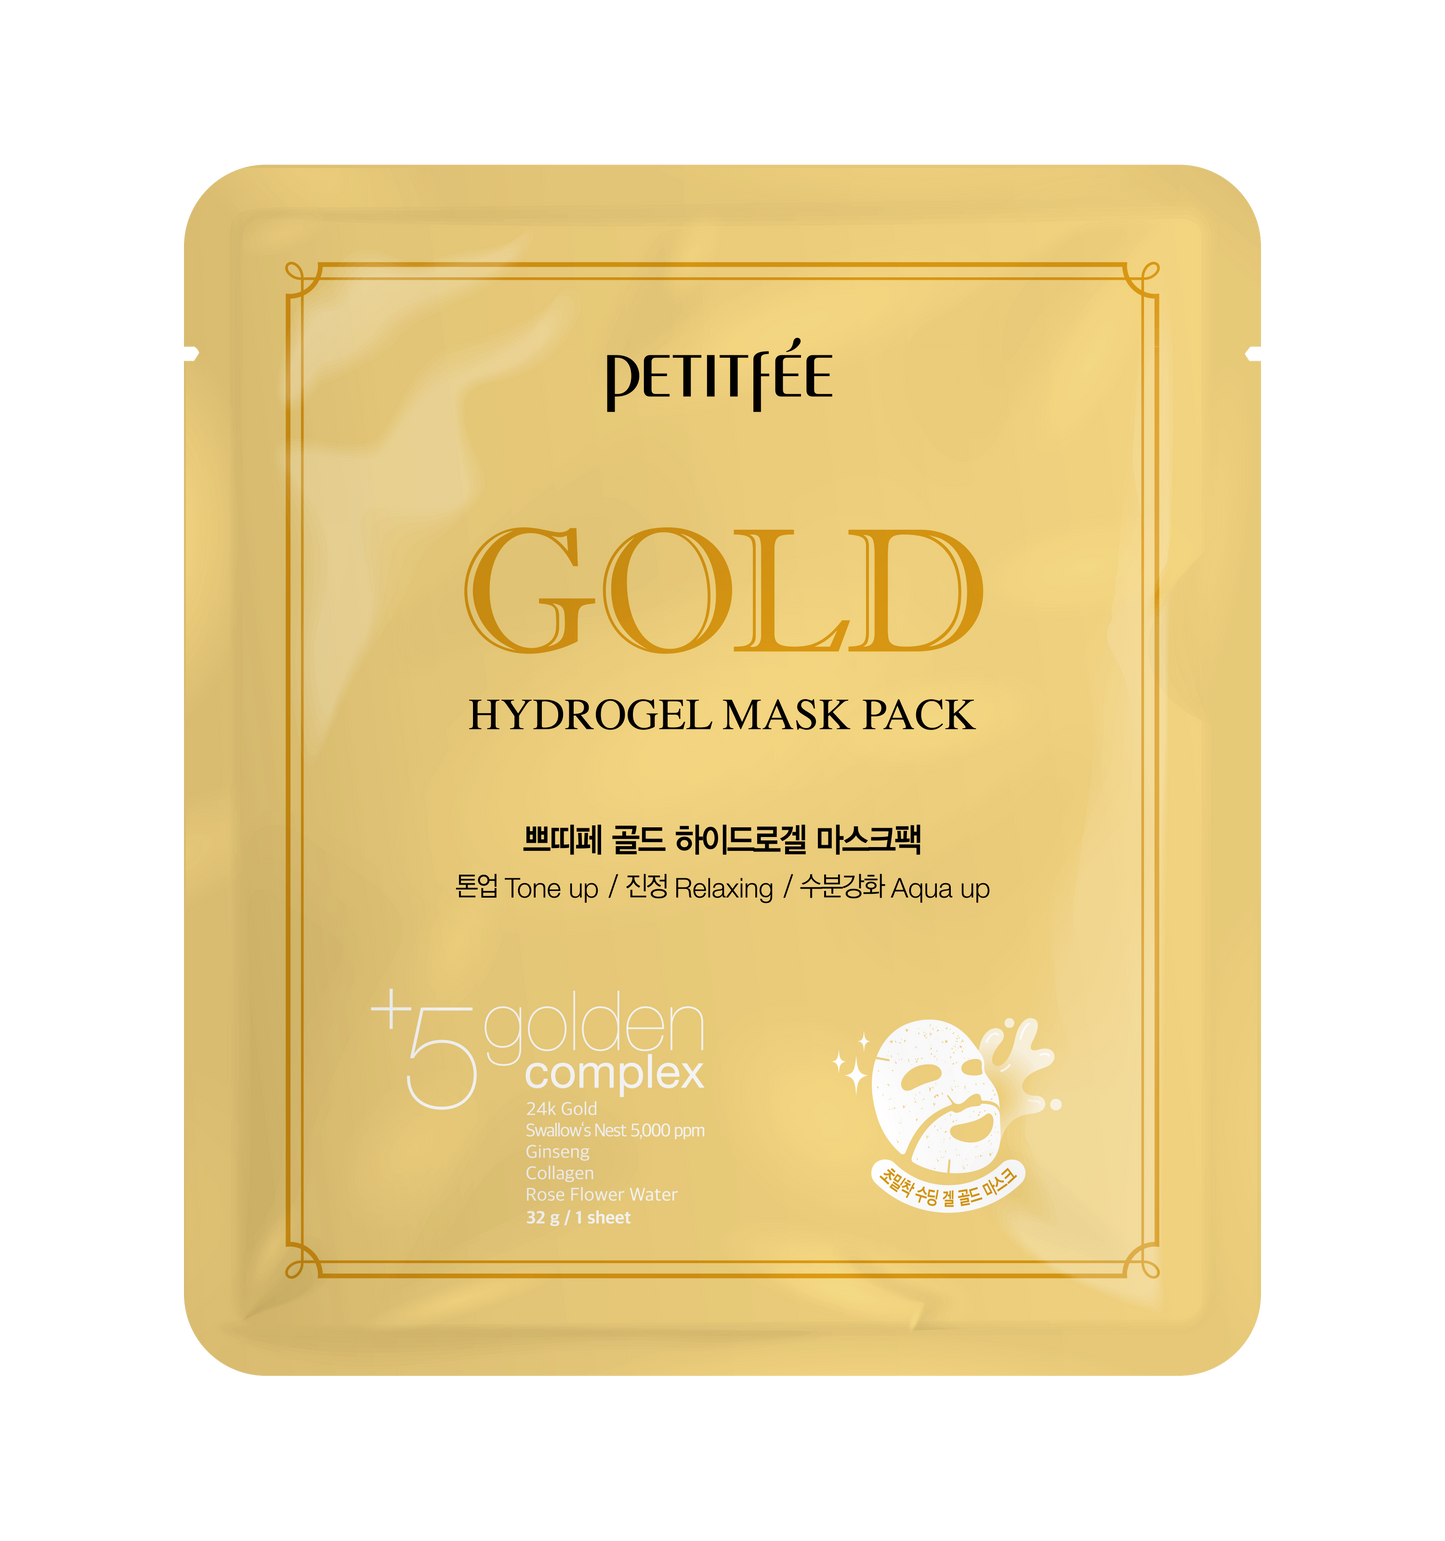 Petitfee Hydrogel Gold face mask 1 τμχ